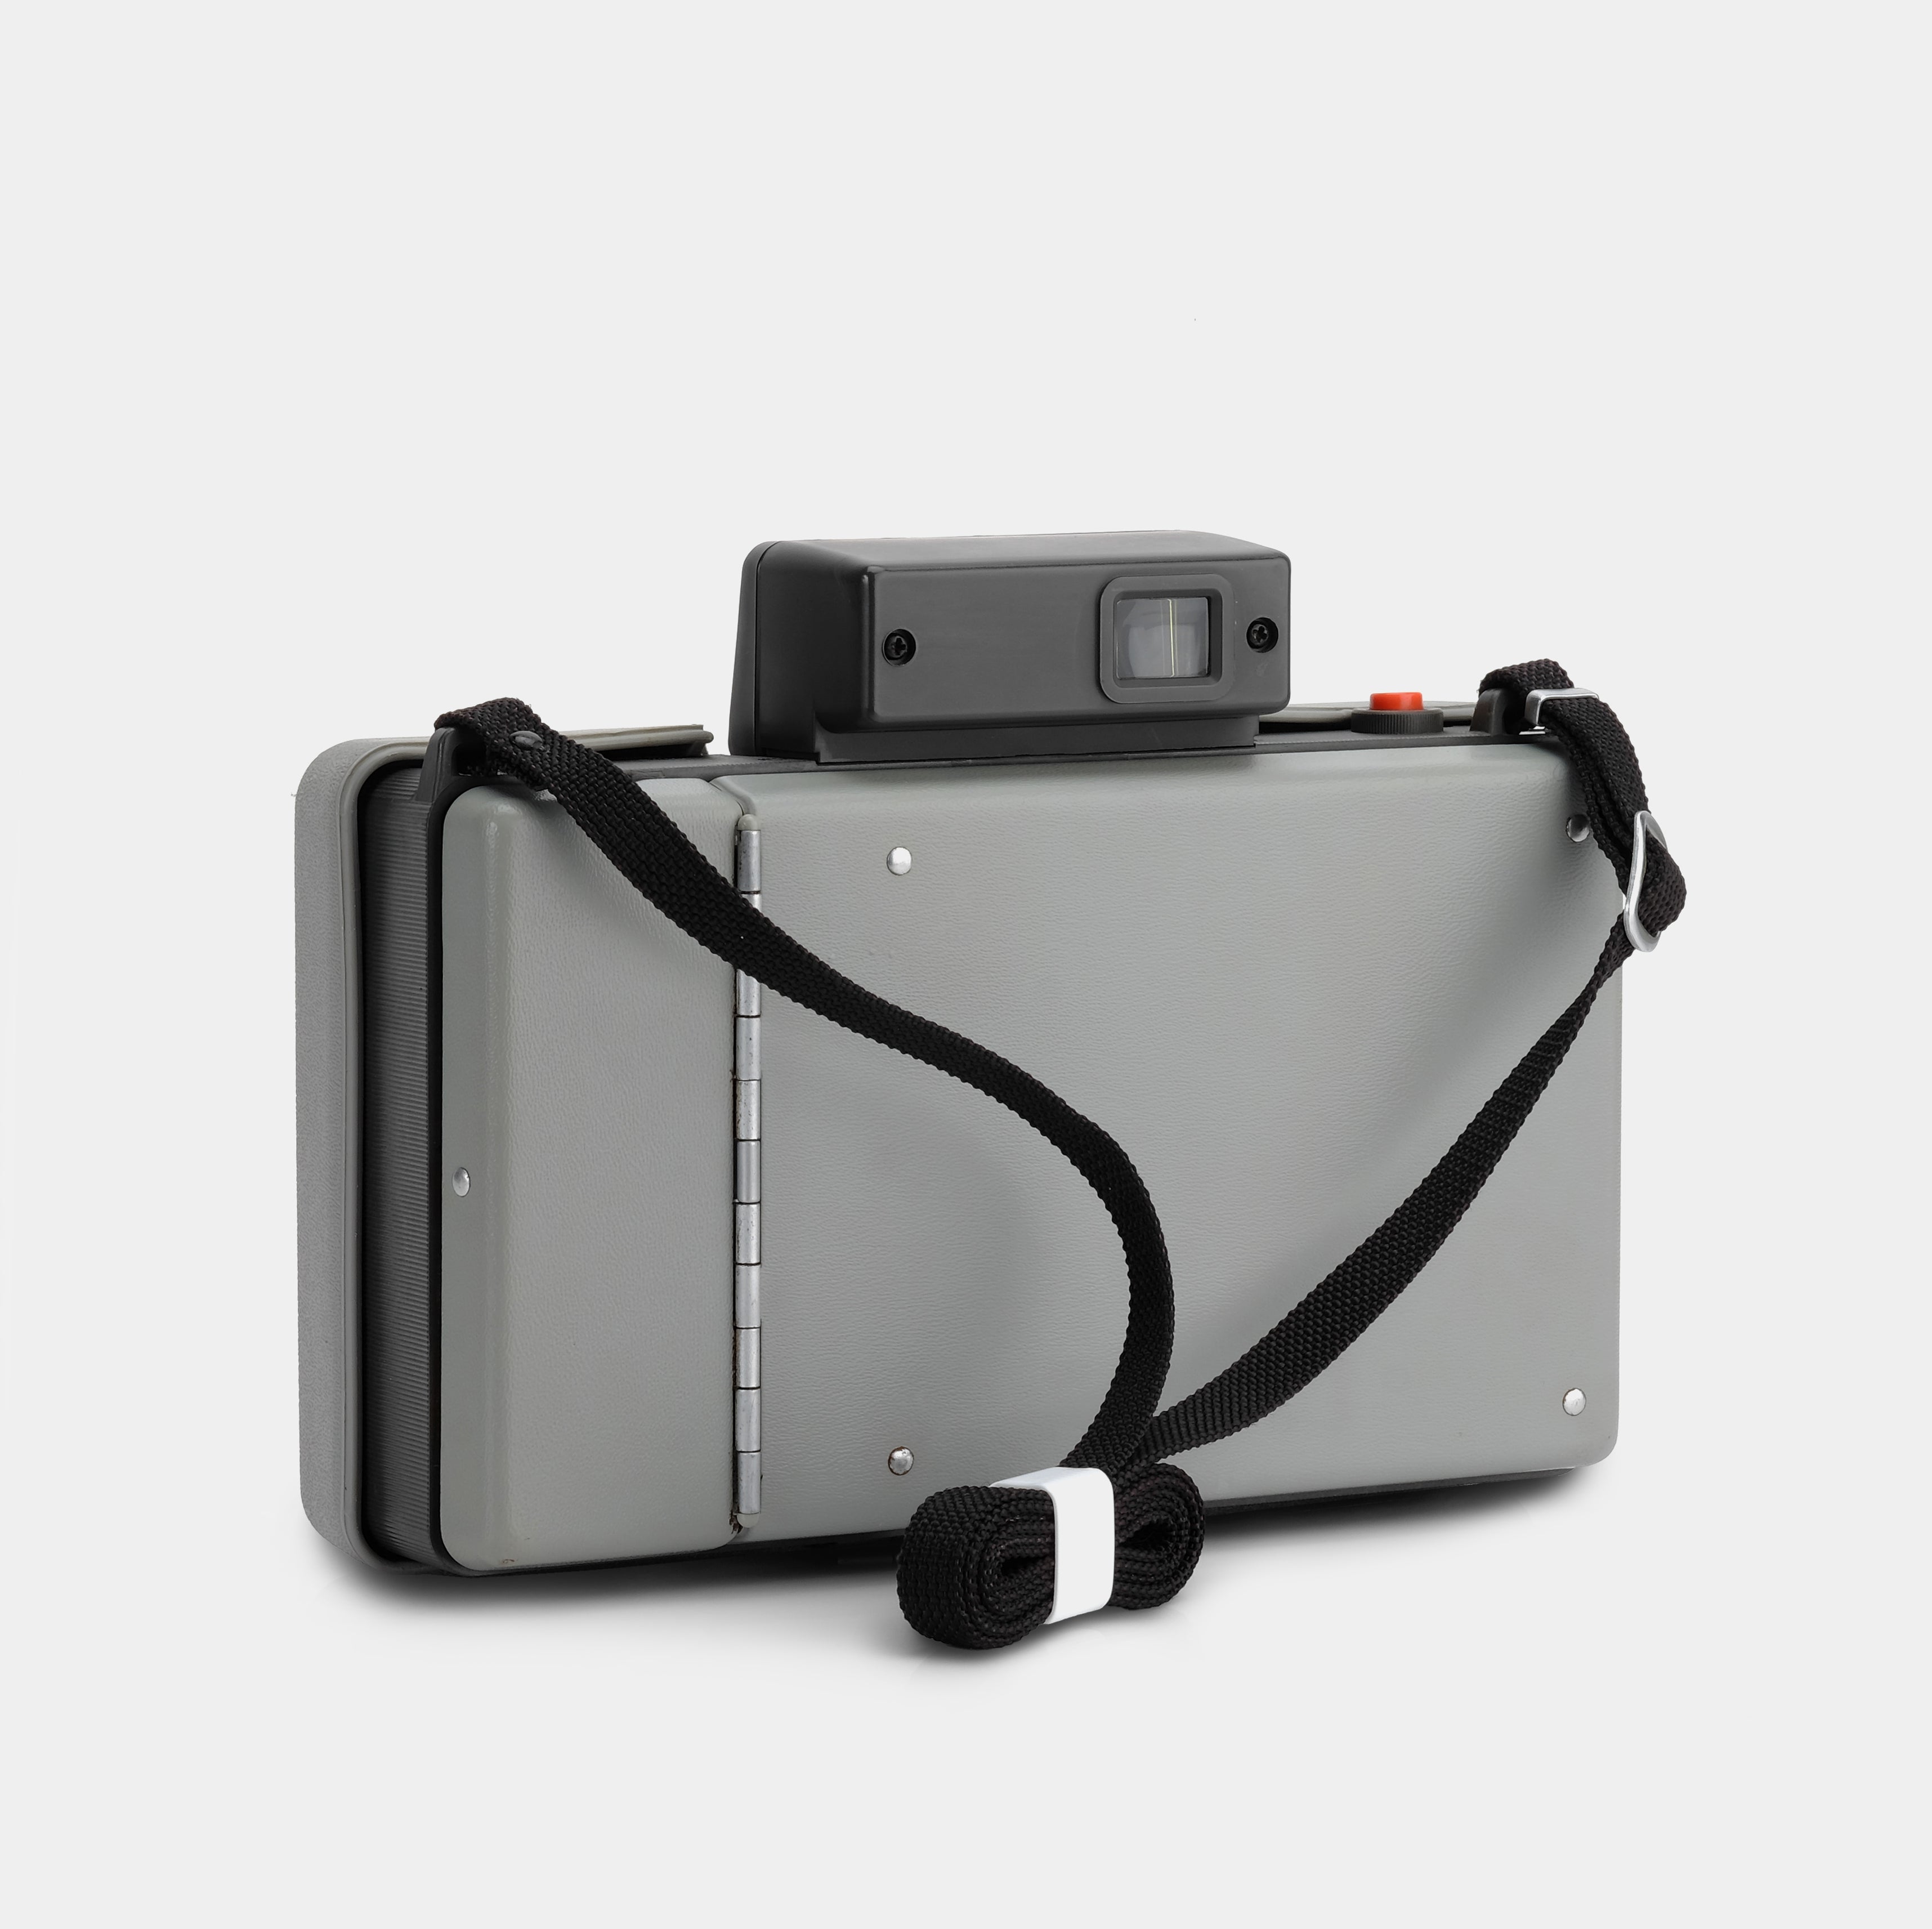 Polaroid Model 210 Packfilm Land Camera